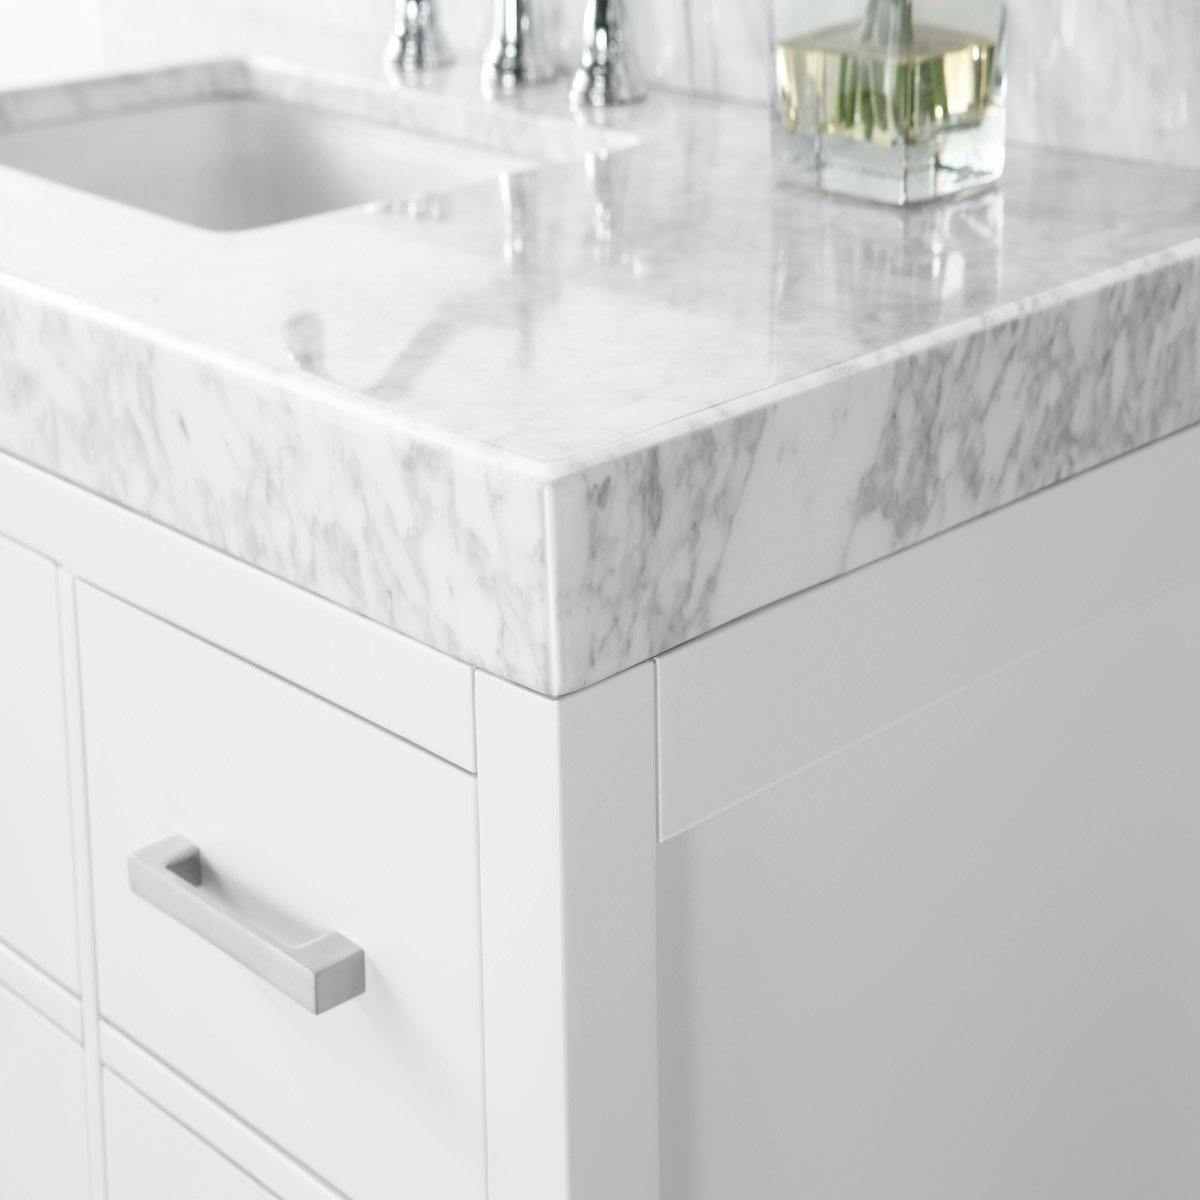 Ancerre Designs Elizabeth 48 Inch White with Nickel Hardware Single Vanity Counter